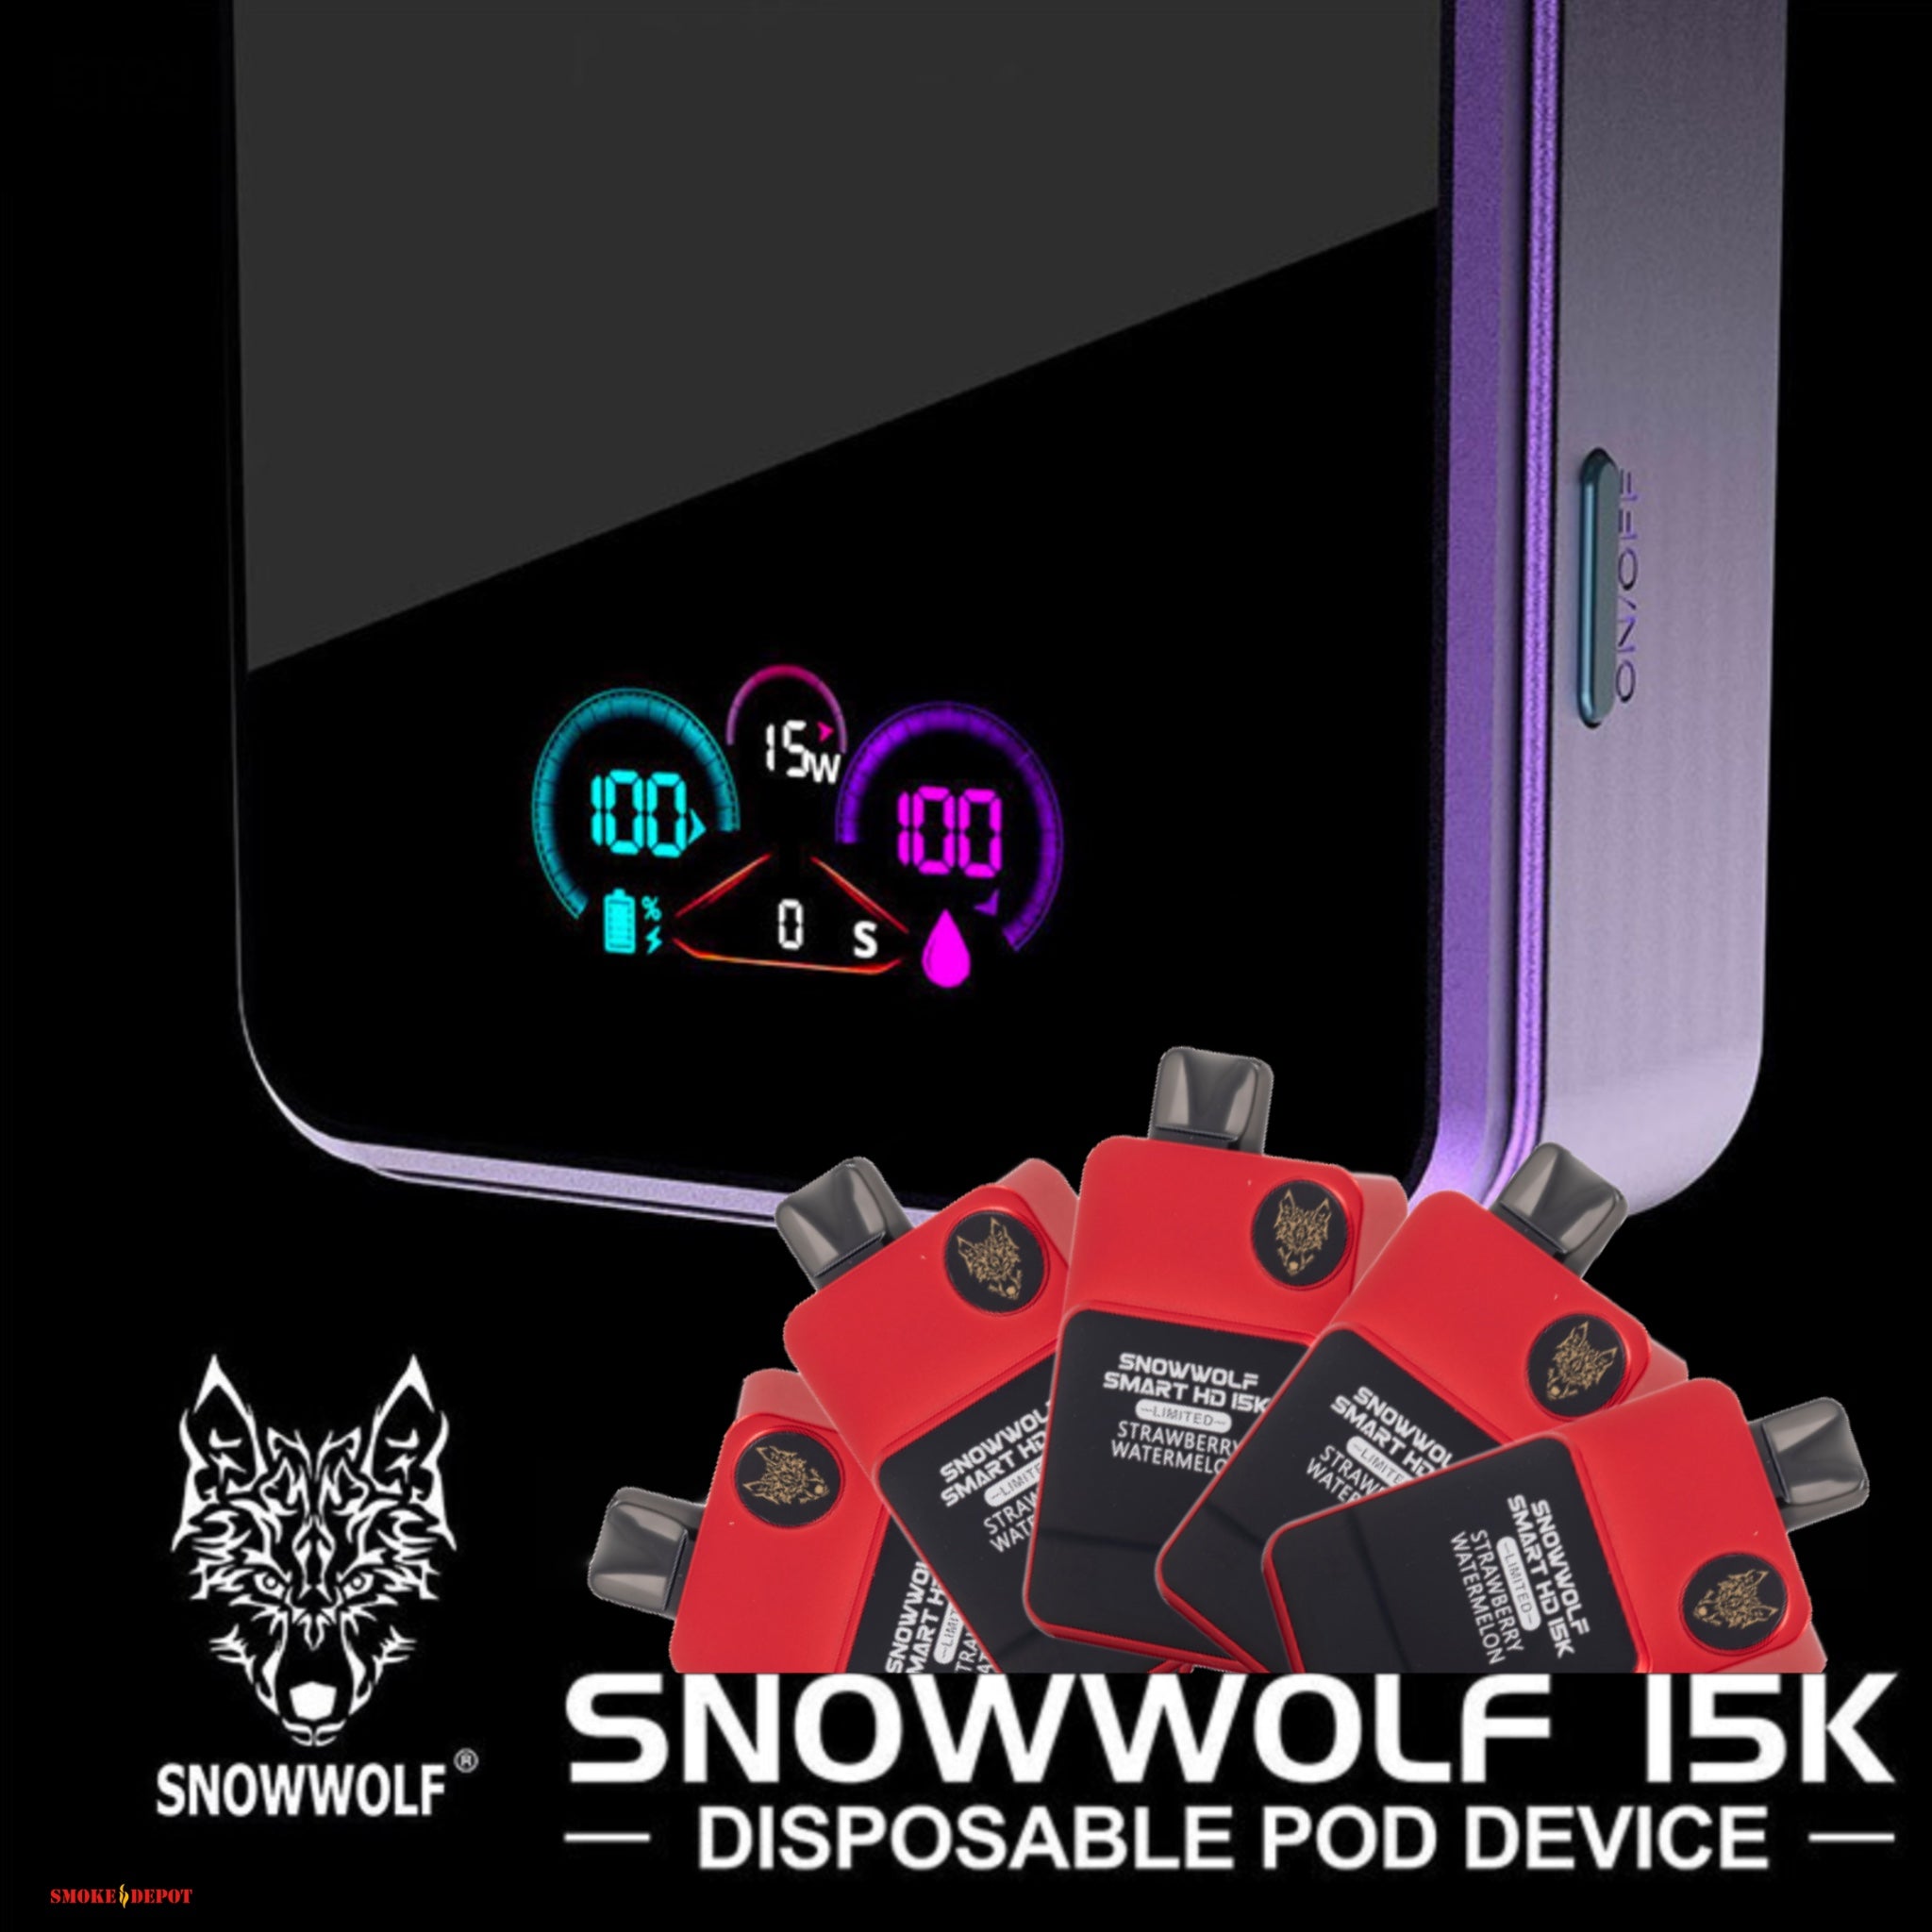 SNOWWOLF Smart HD 15K Rechargeable Disposable [15,000]